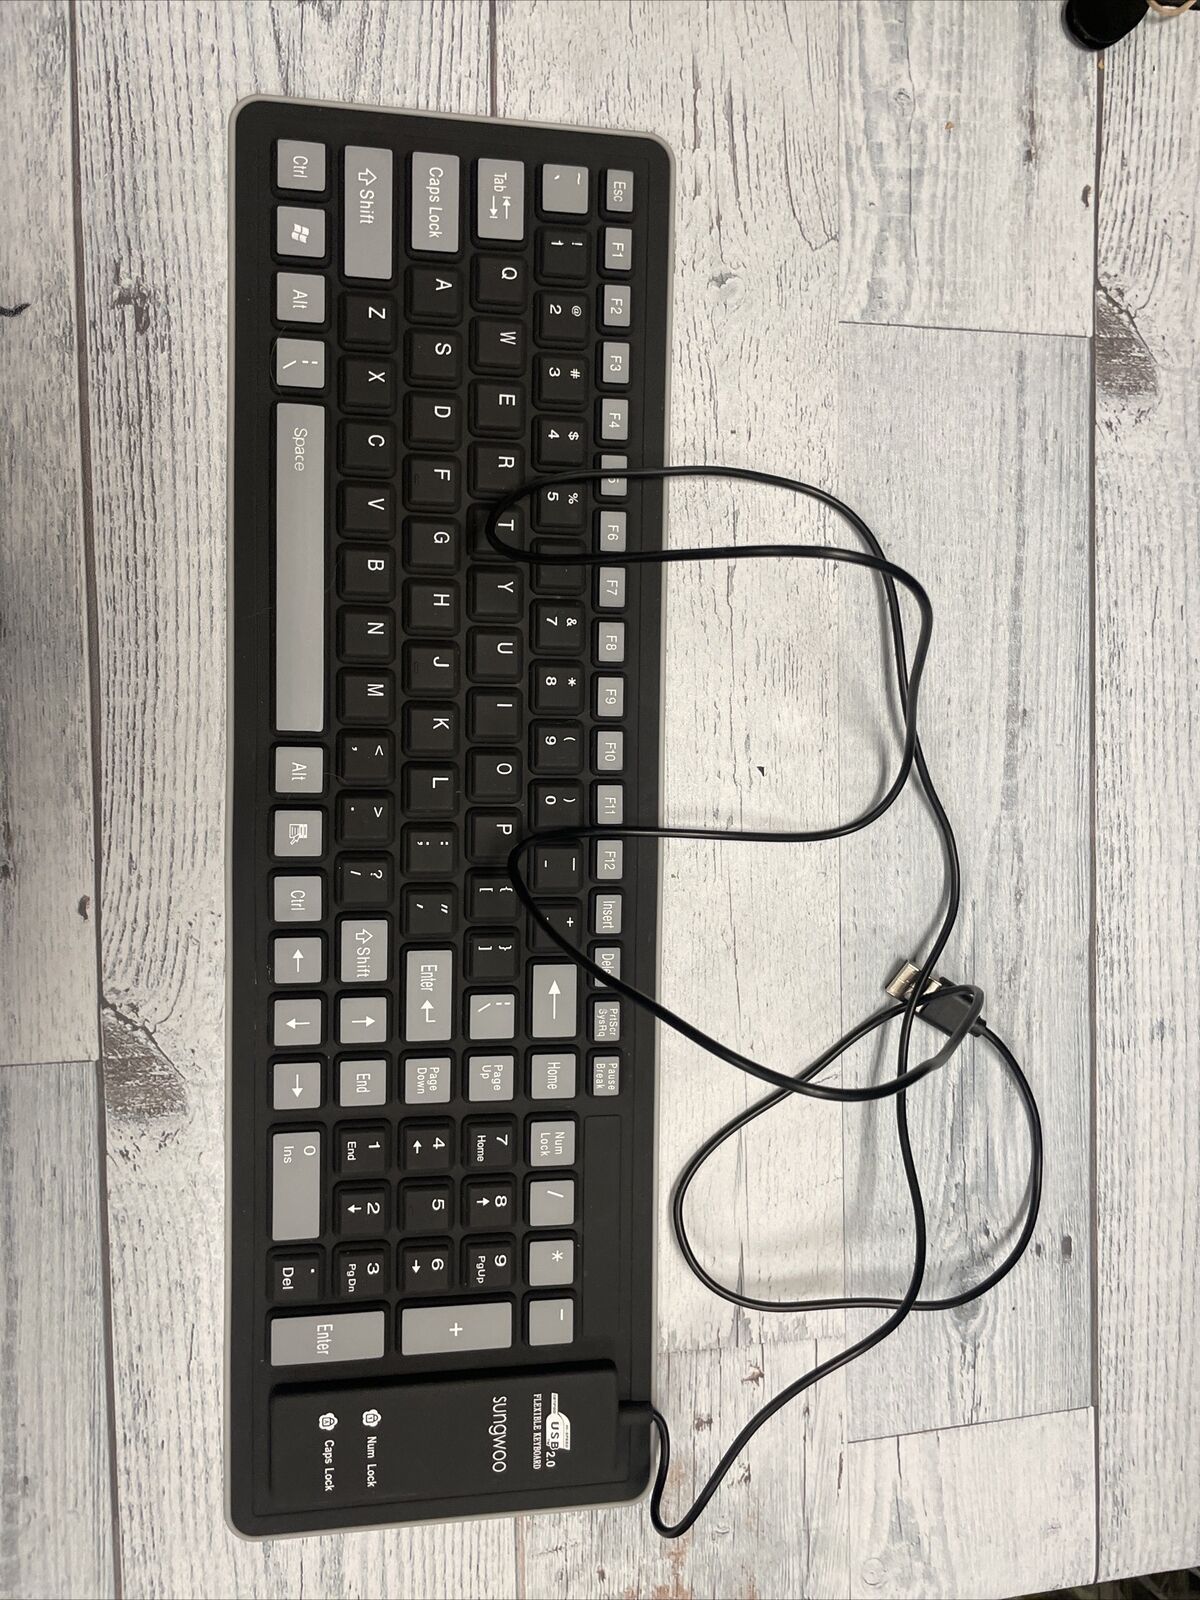 Soft Keyboard Black And Gray